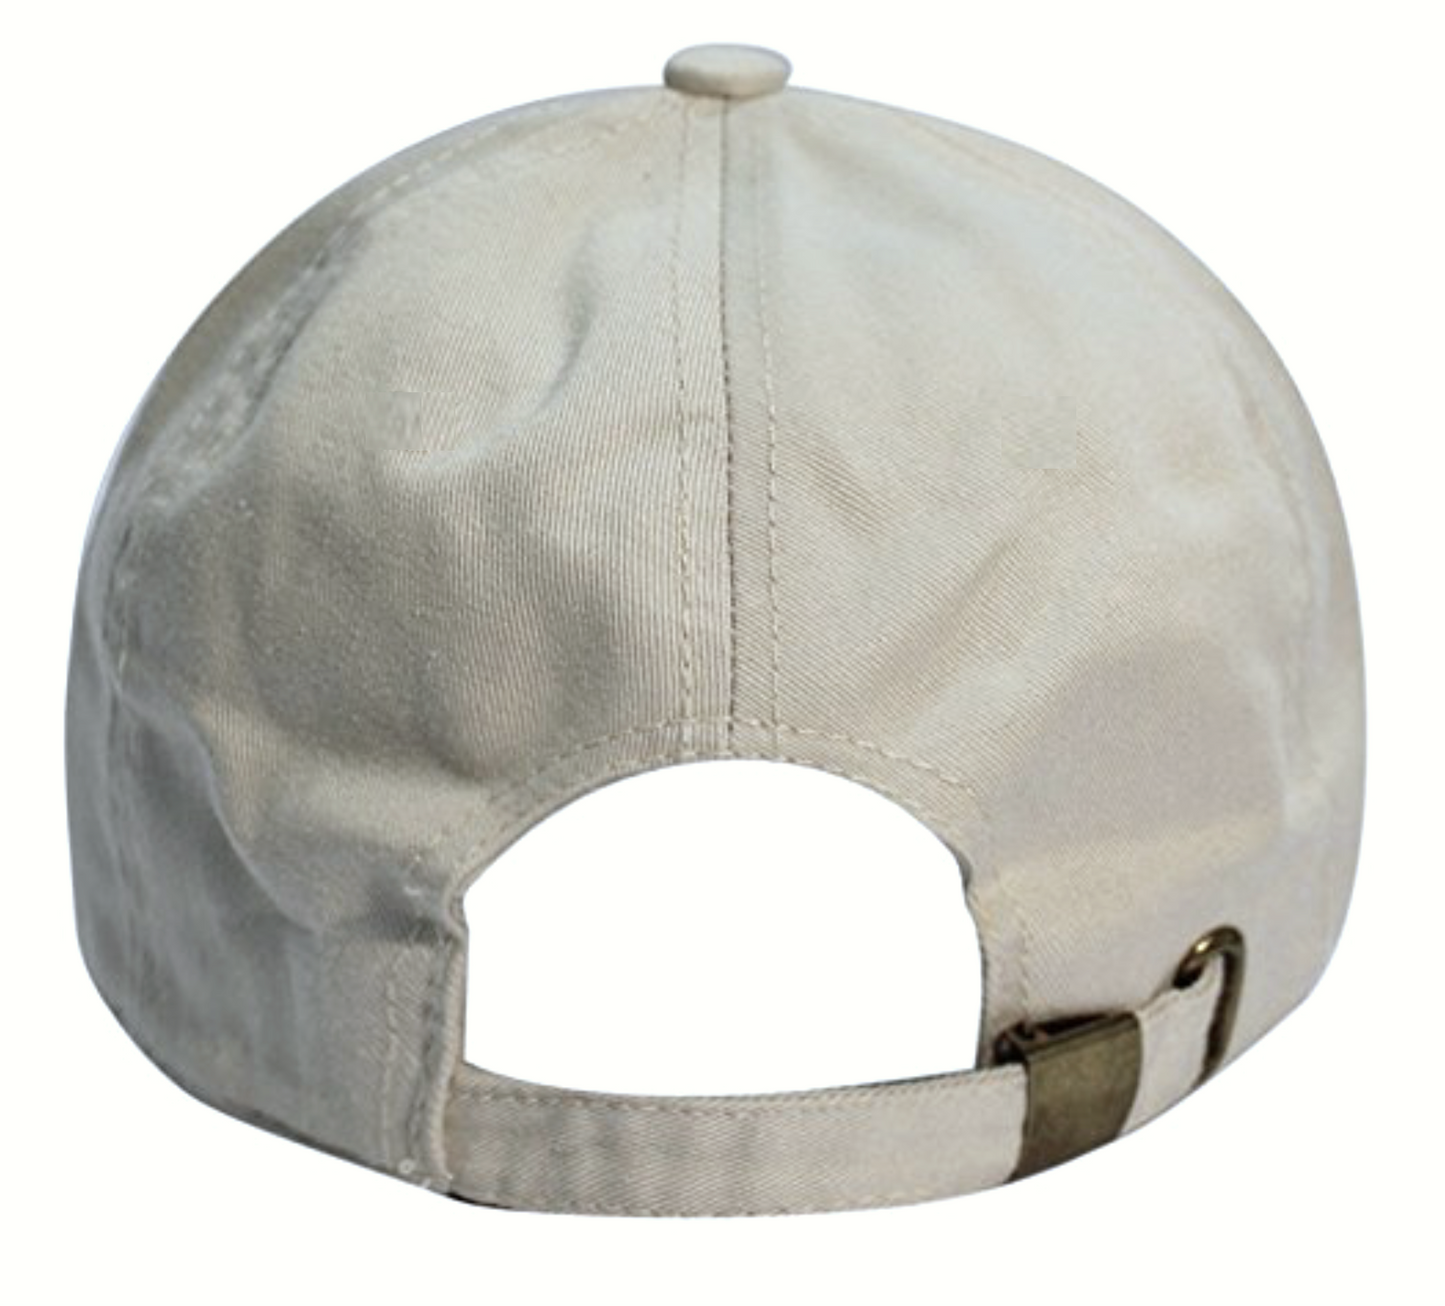 Balance X Lifestyle - Standard Creme Baseball Hat